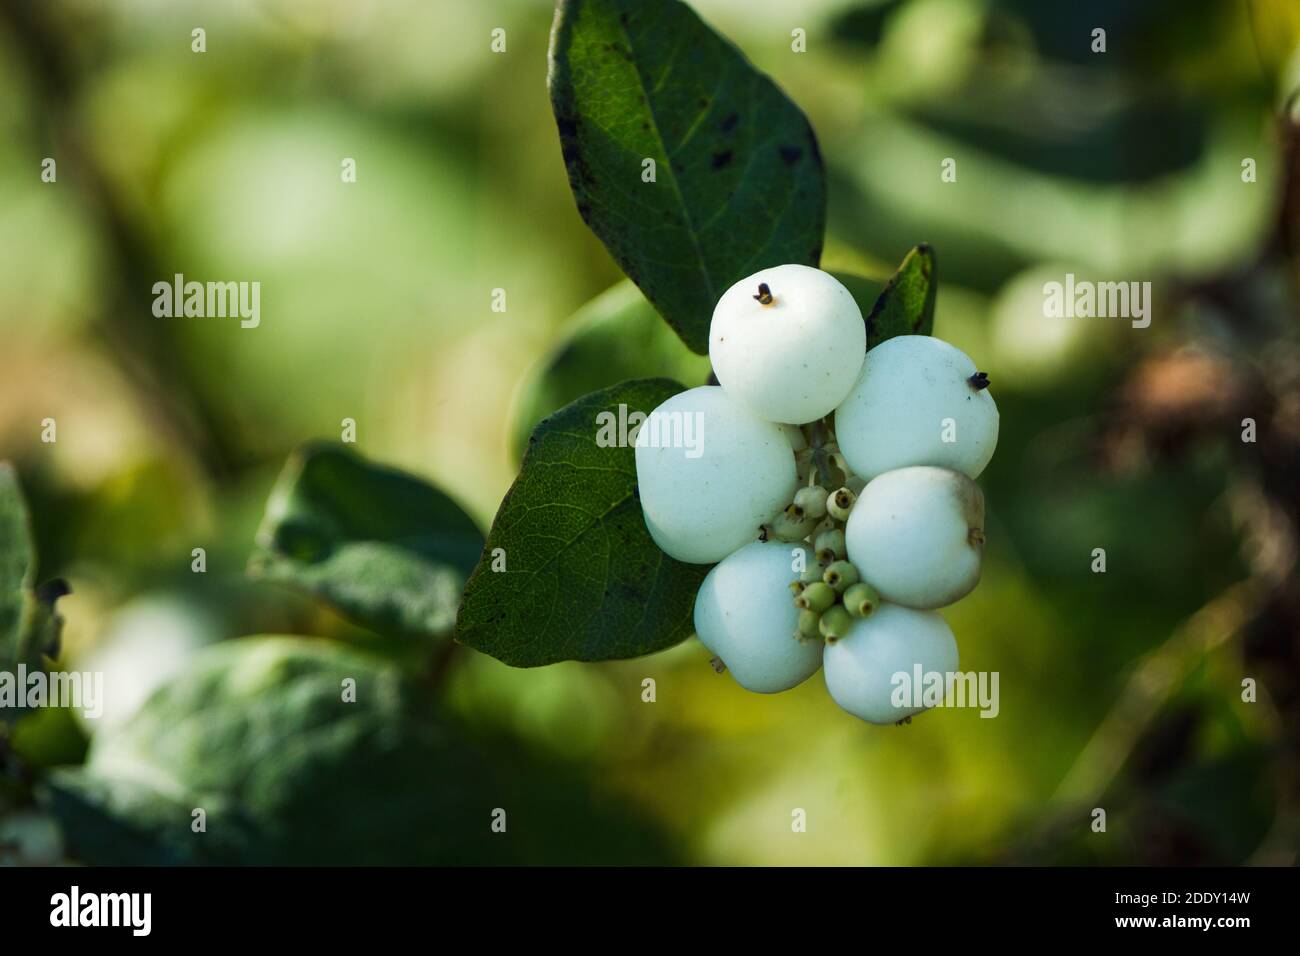 Symphoricarpos albus (Common Snowberry) plant with white berries. Selective focus. Shallow depth of field. Stock Photo